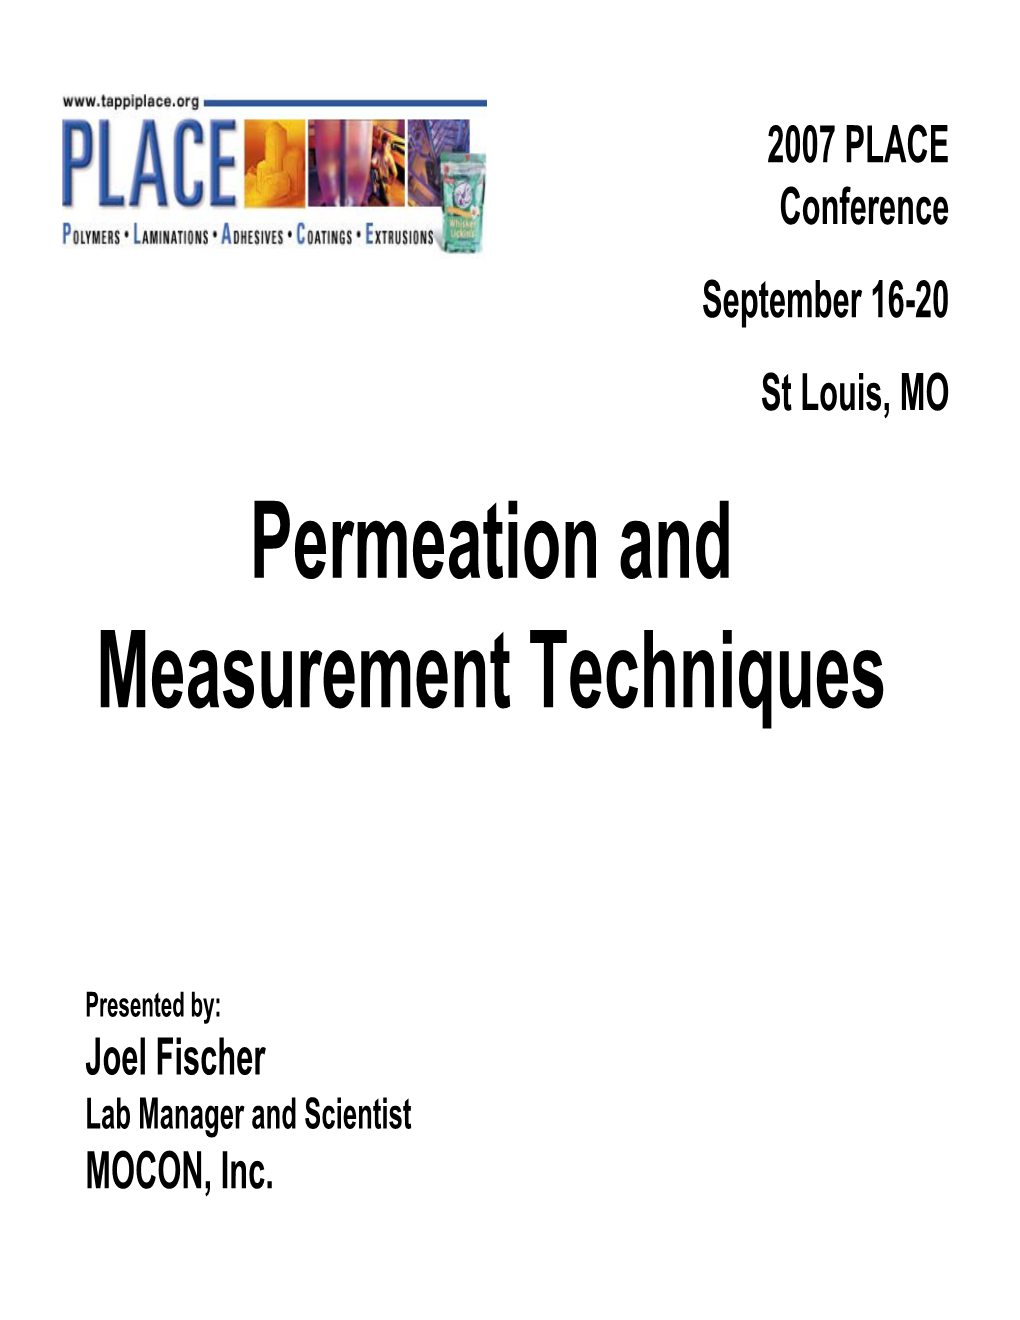 Permeation and Measurement Techniques